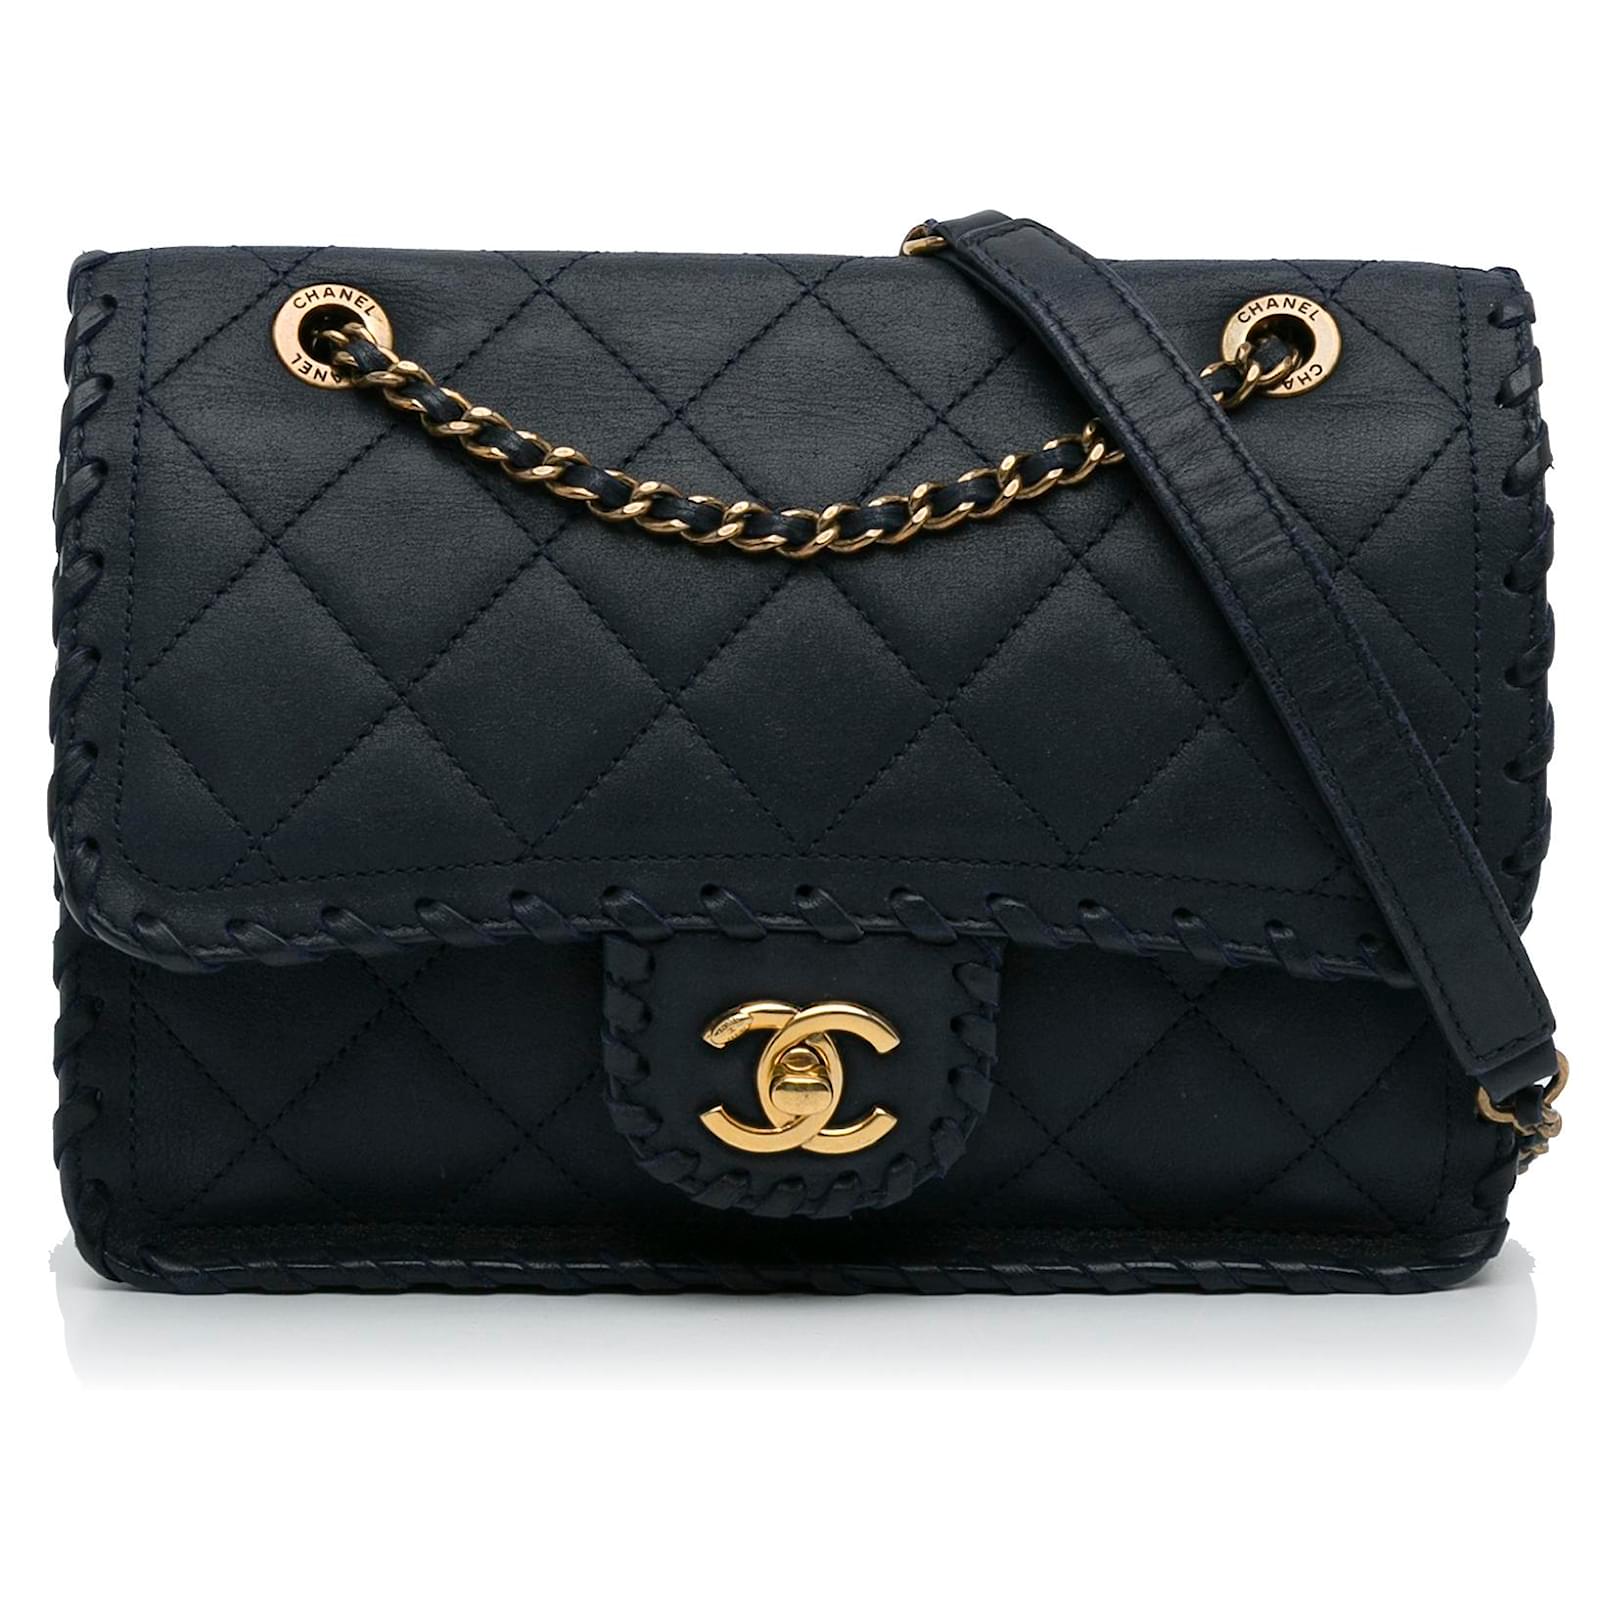 Chanel Happy Stitch Small Flap Bag